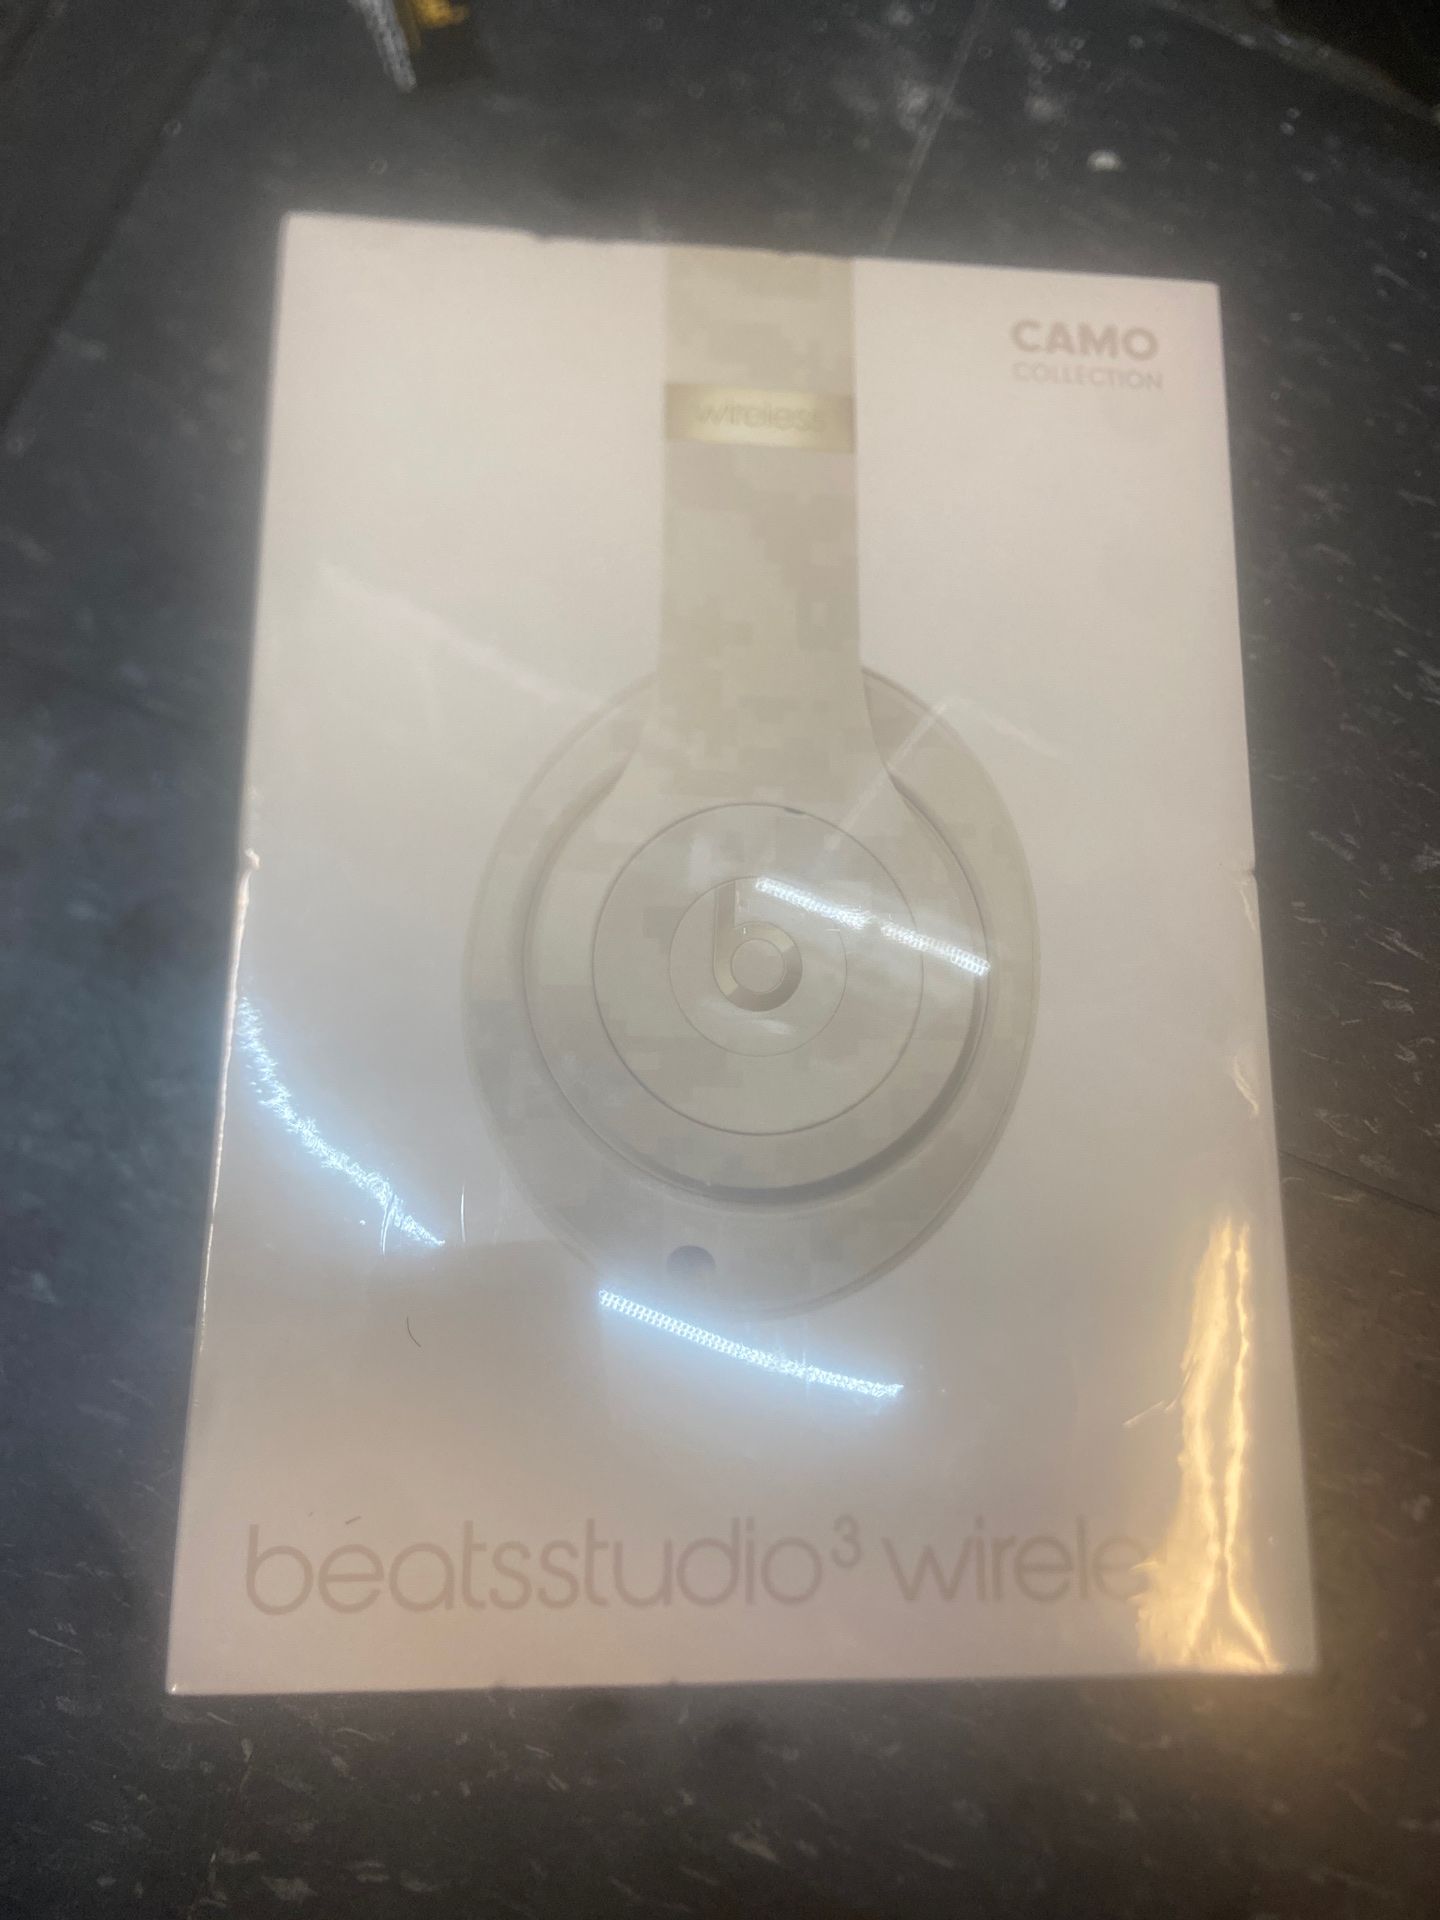 Beats studio 3 brand new